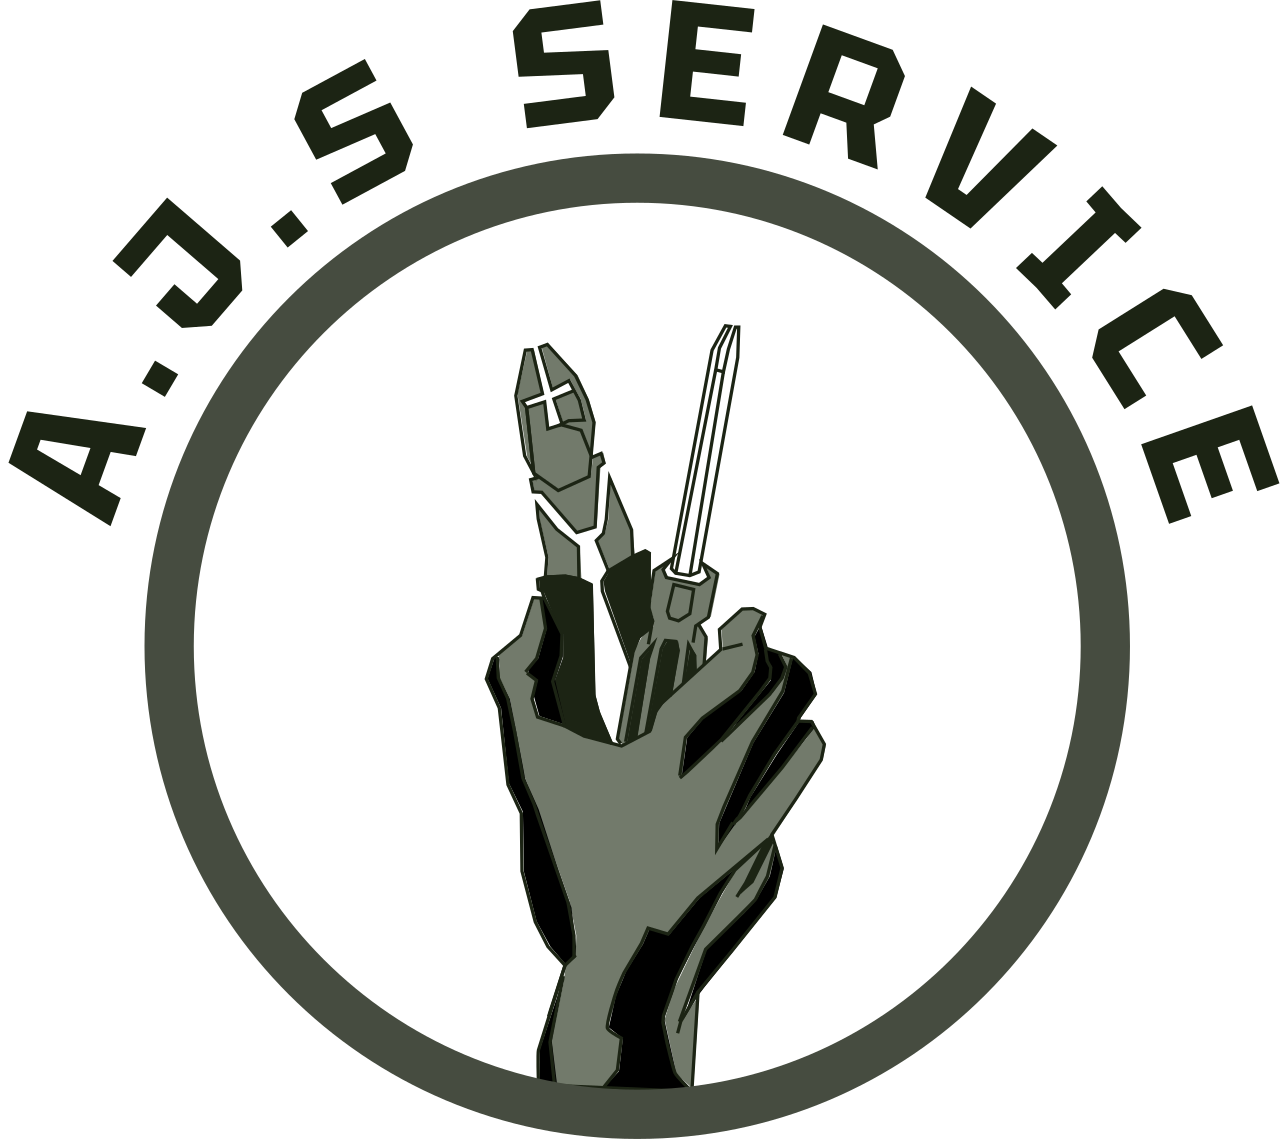 A.J.S SERVICE's web page